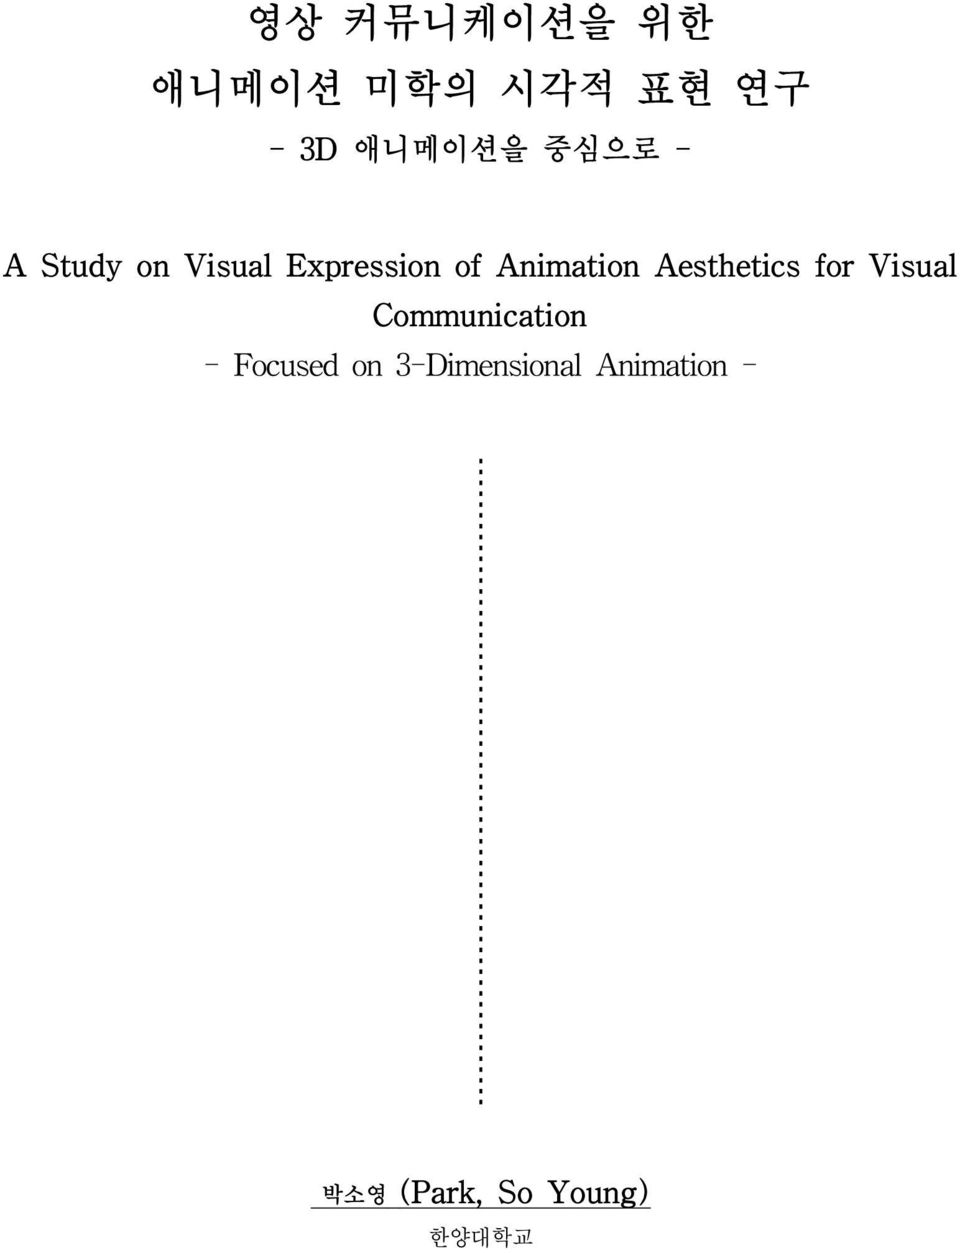 Aesthetics for Visual Communication - Focused on